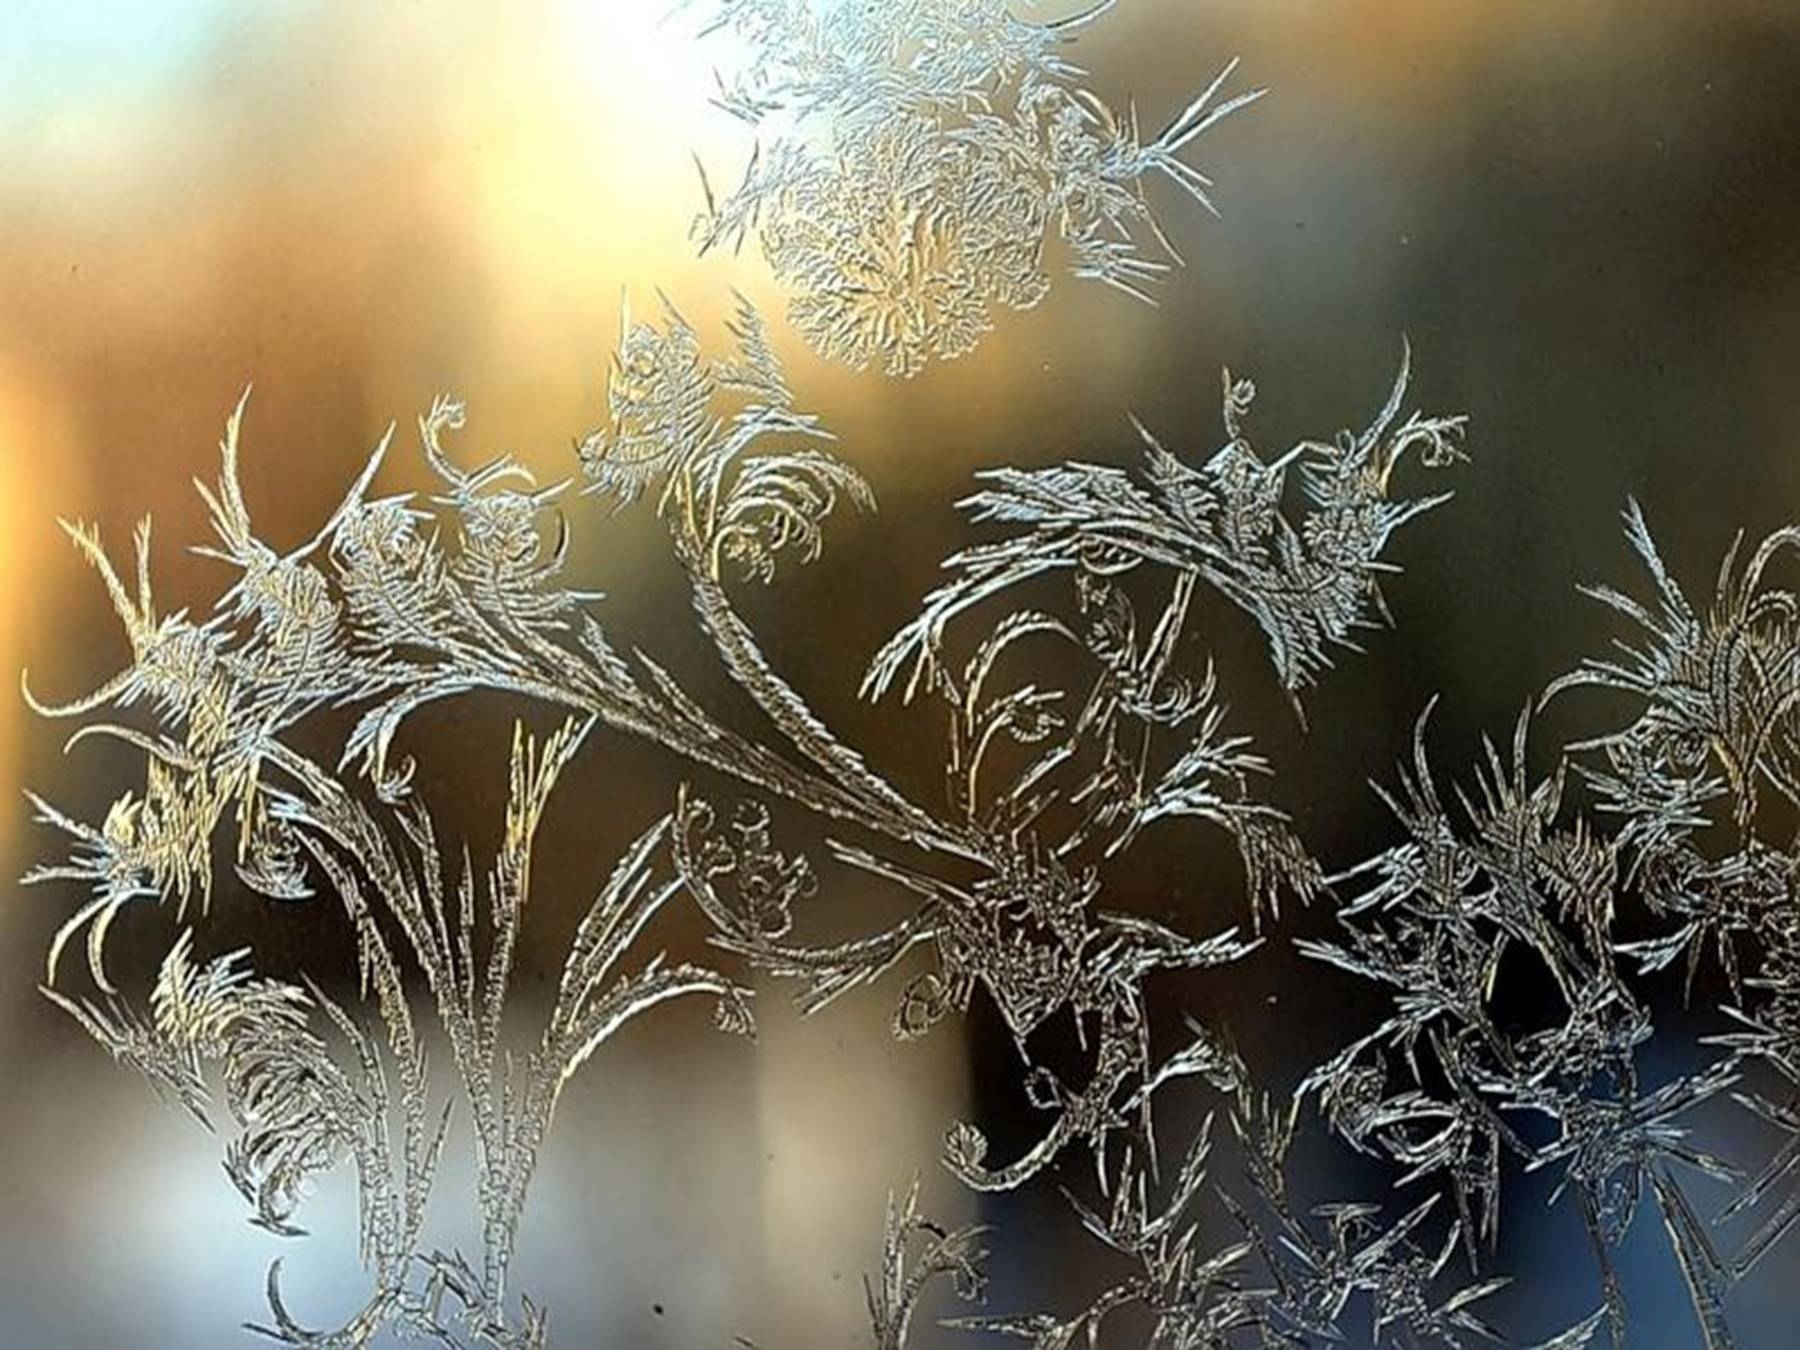 Мороз рисует на стекле узоры. Узоры на стекле. Морозные узоры на стекле. Зимние узоры на окнах. Морозные узоры на окне.